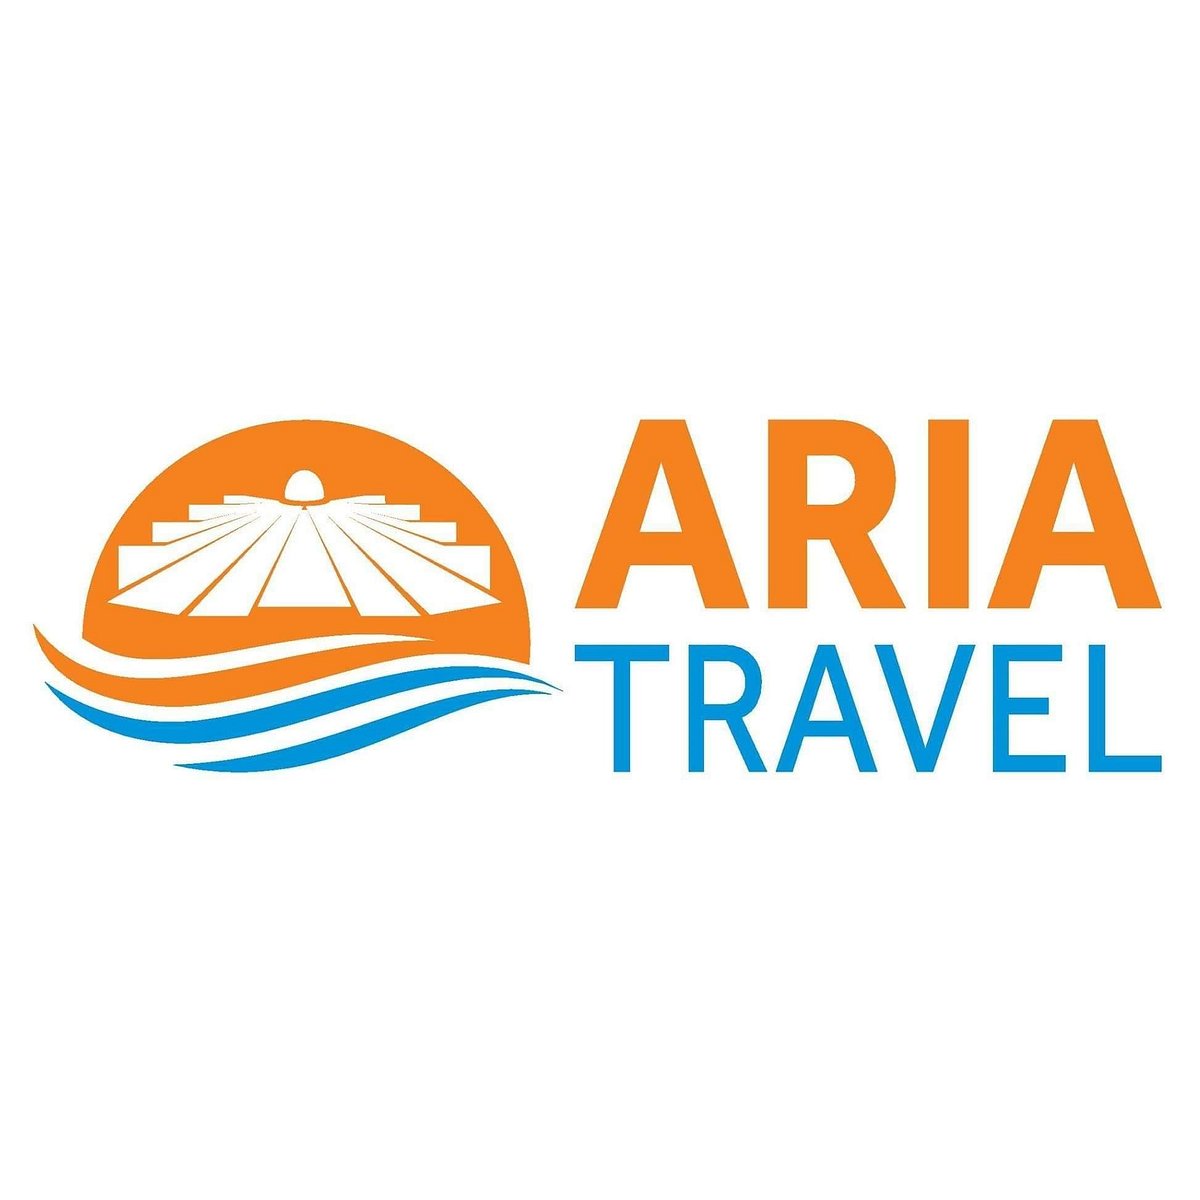 aria travel albania